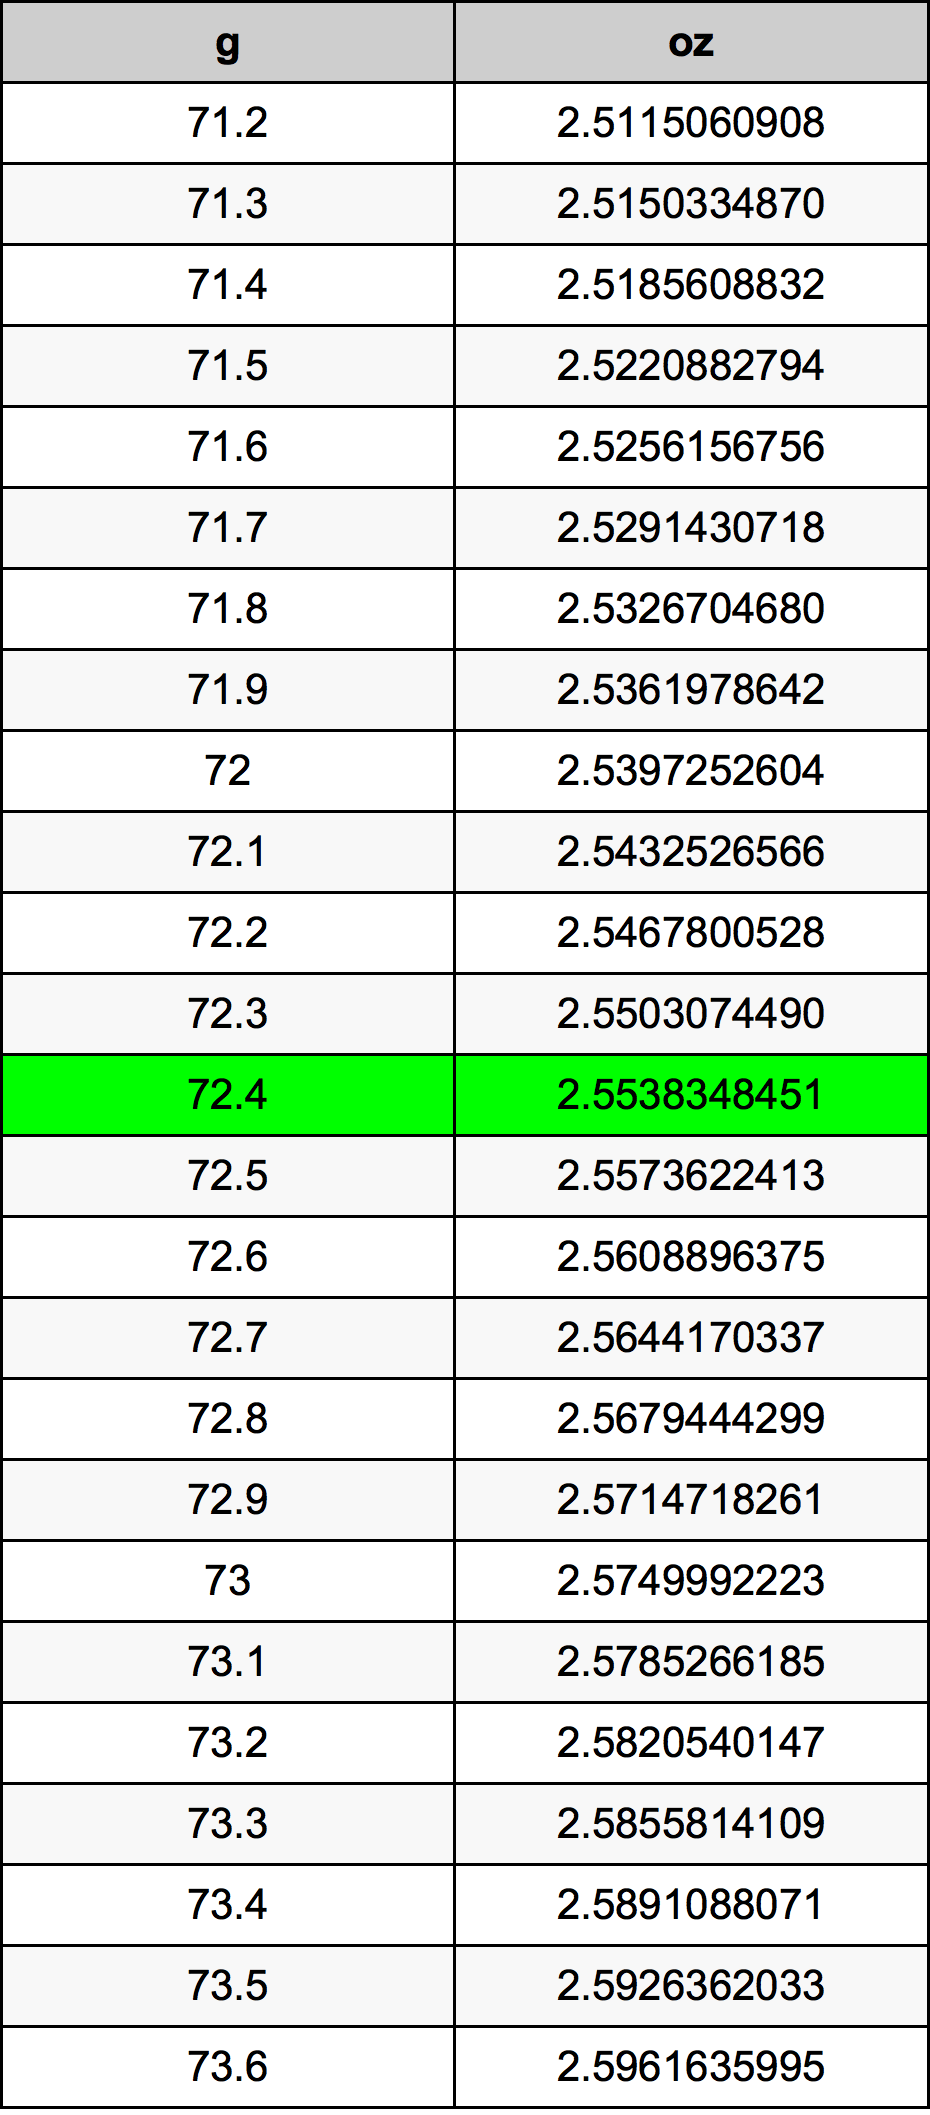 72.4 غرام جدول تحويل